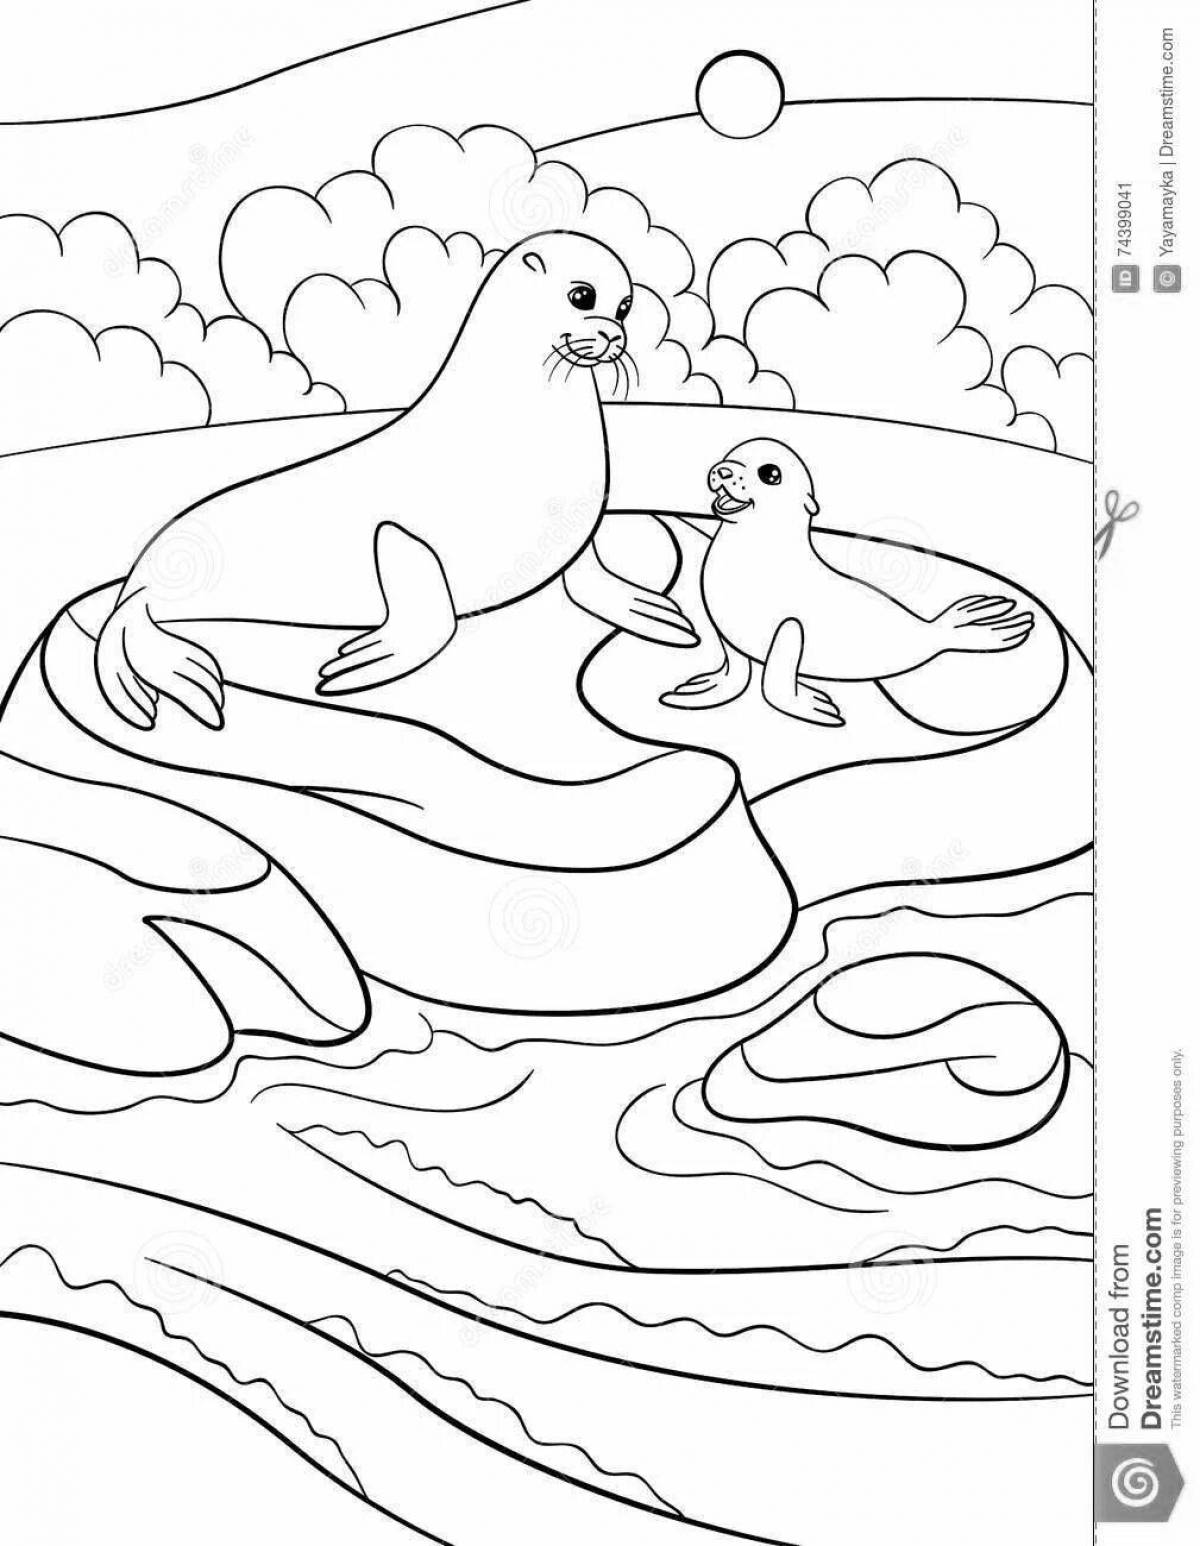 Adorable Baikal seal coloring page for kids